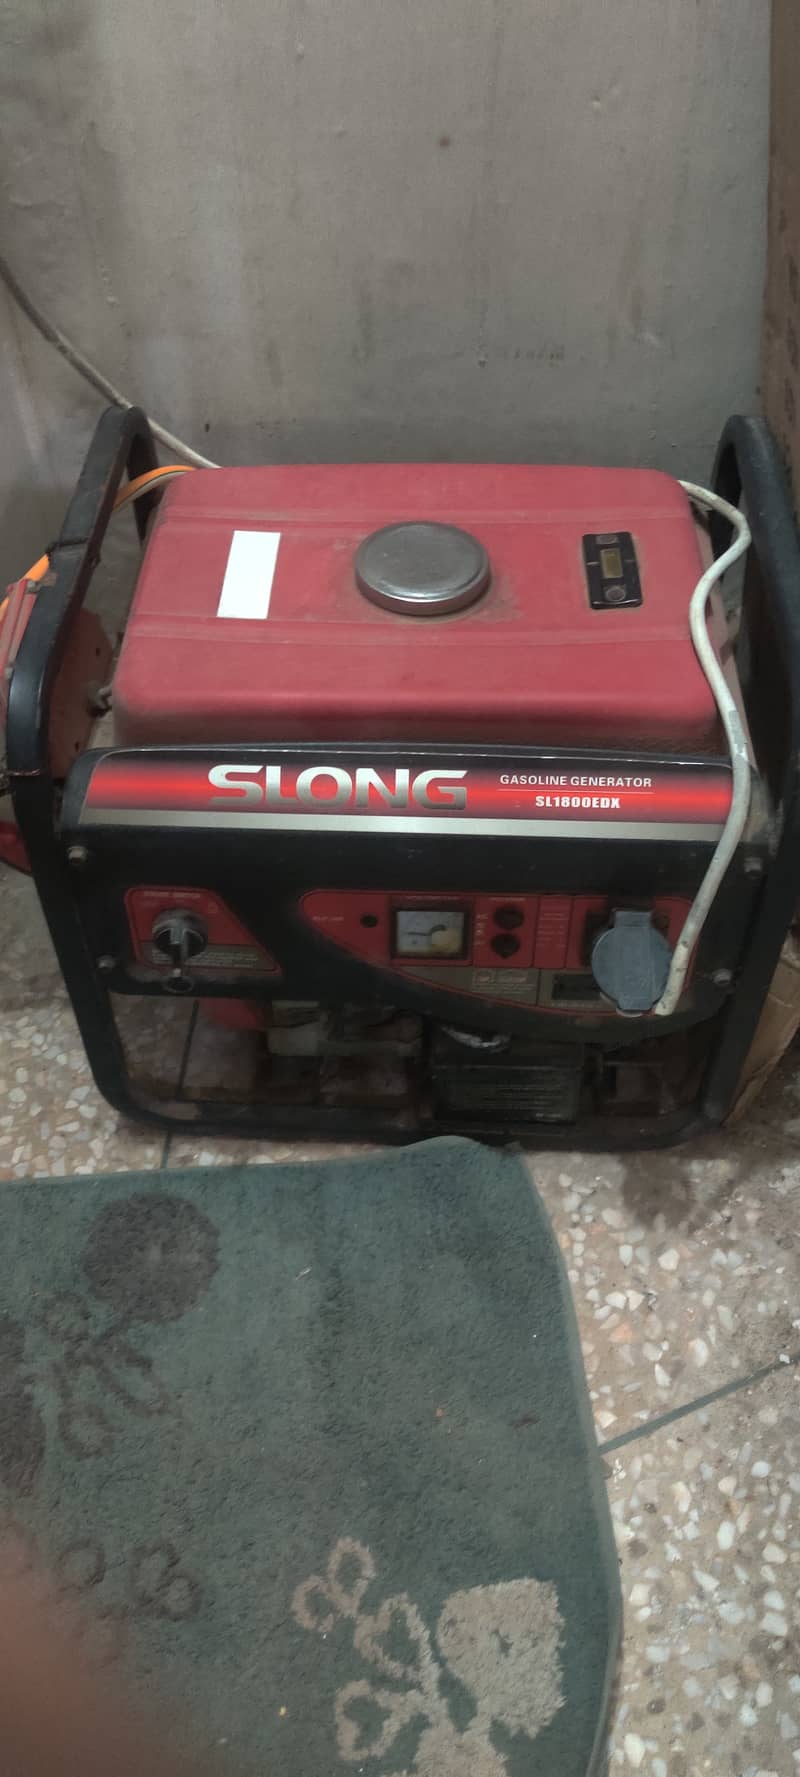 Slong Gasoline Generator 3